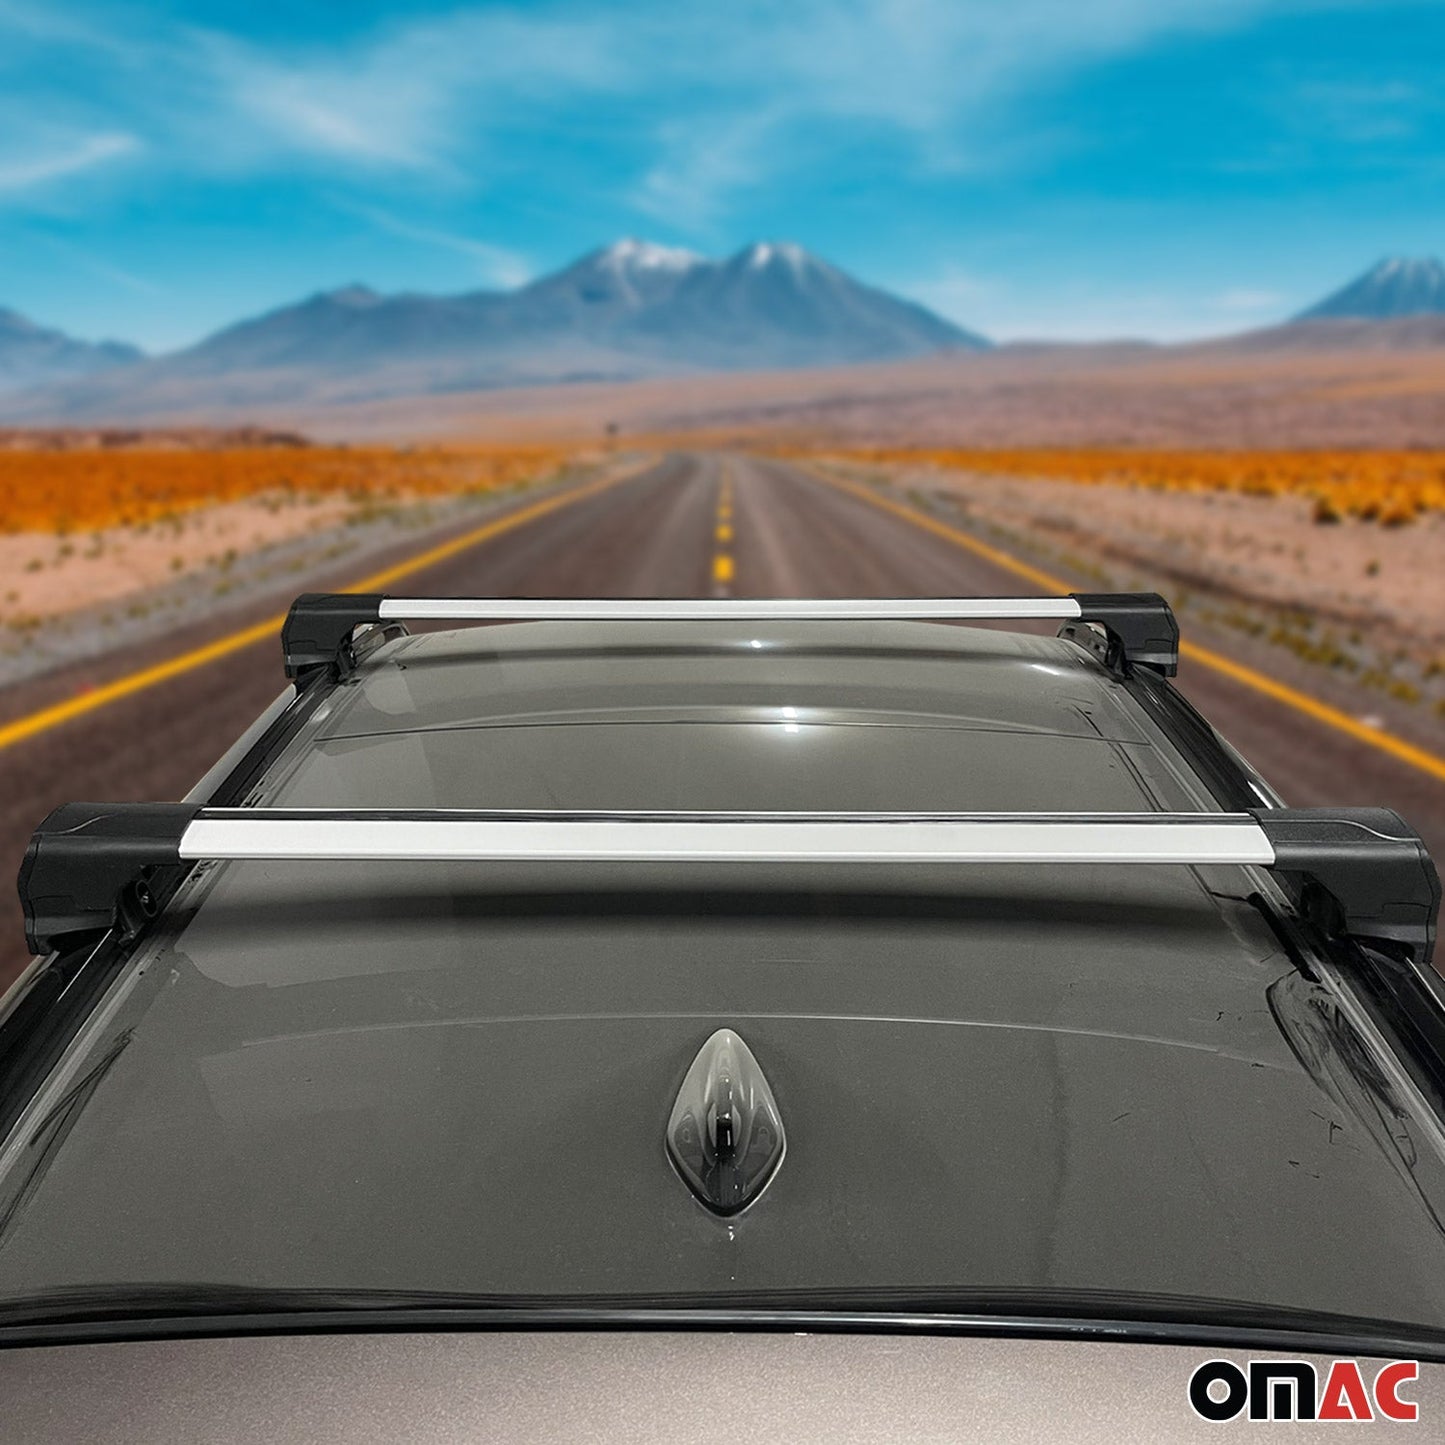 OMAC Alu Roof Racks Cross Bars Luggage Carrier for BMW X5 E70 2007-2013 Silver 2Pcs '1202916